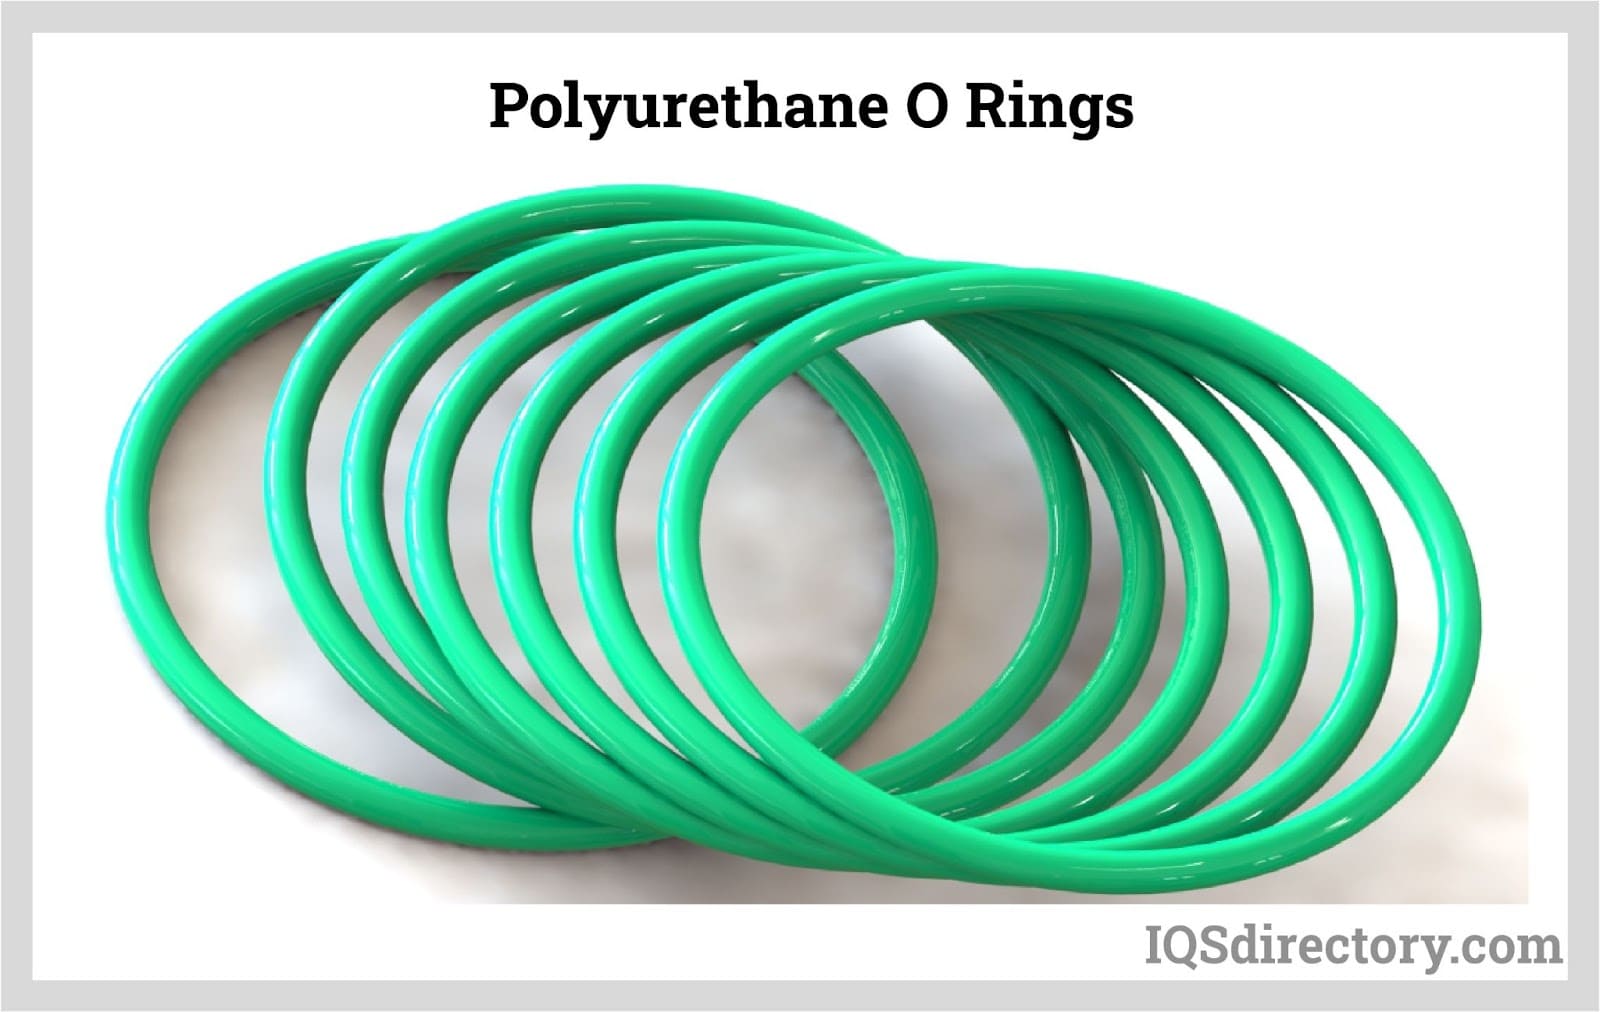 Polyurethane O Rings